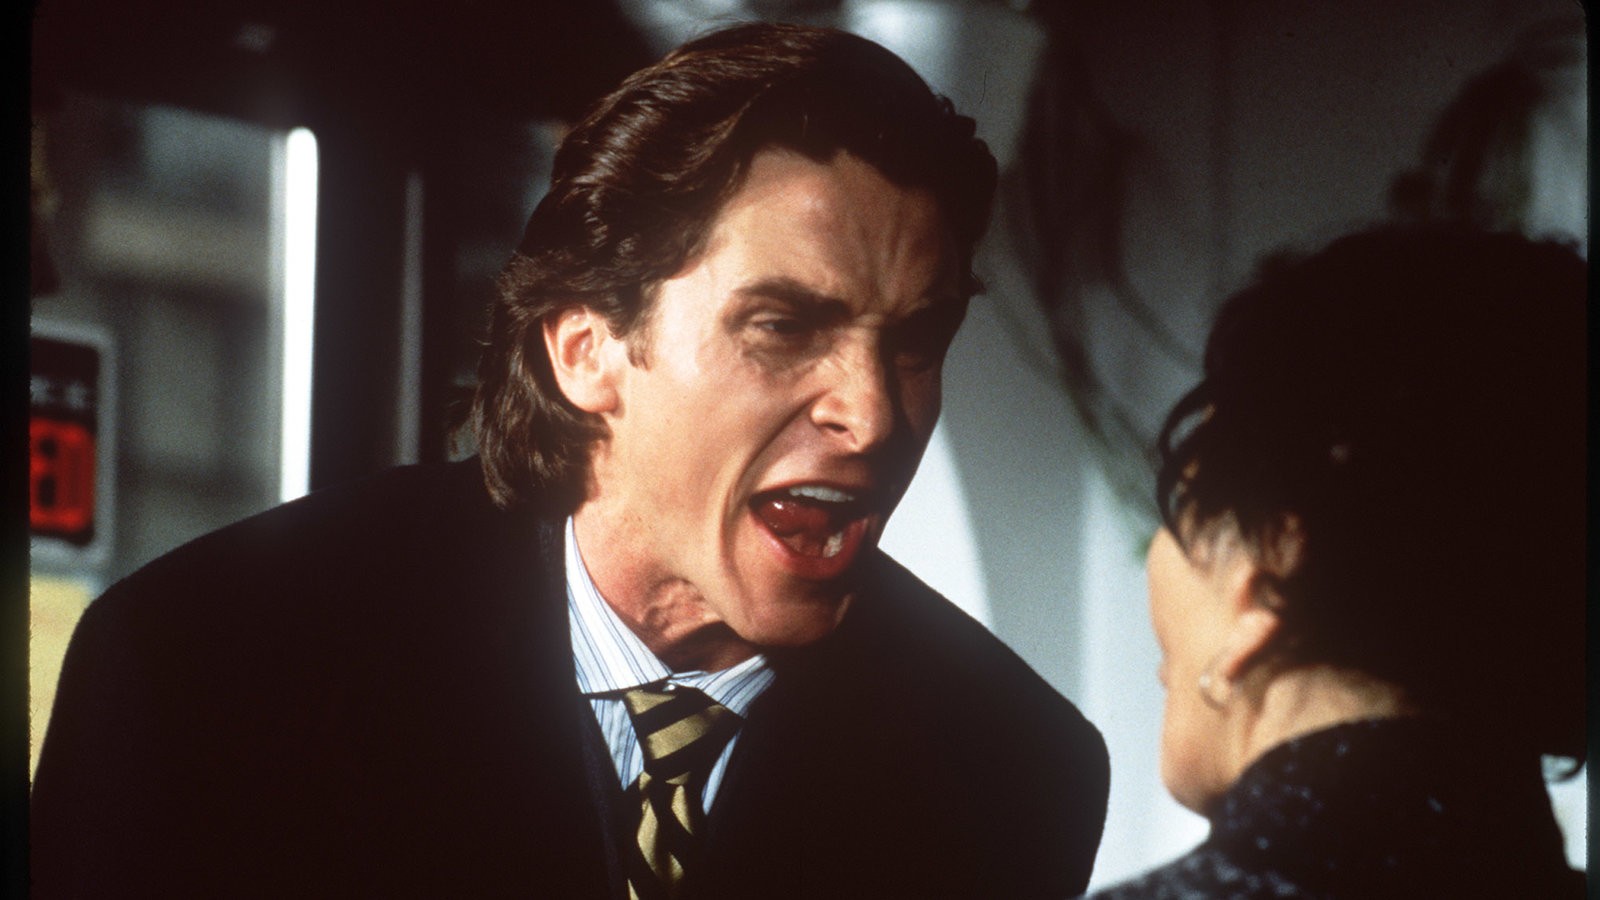 Christian Bale as Patrick Bateman in American Psycho (2000)